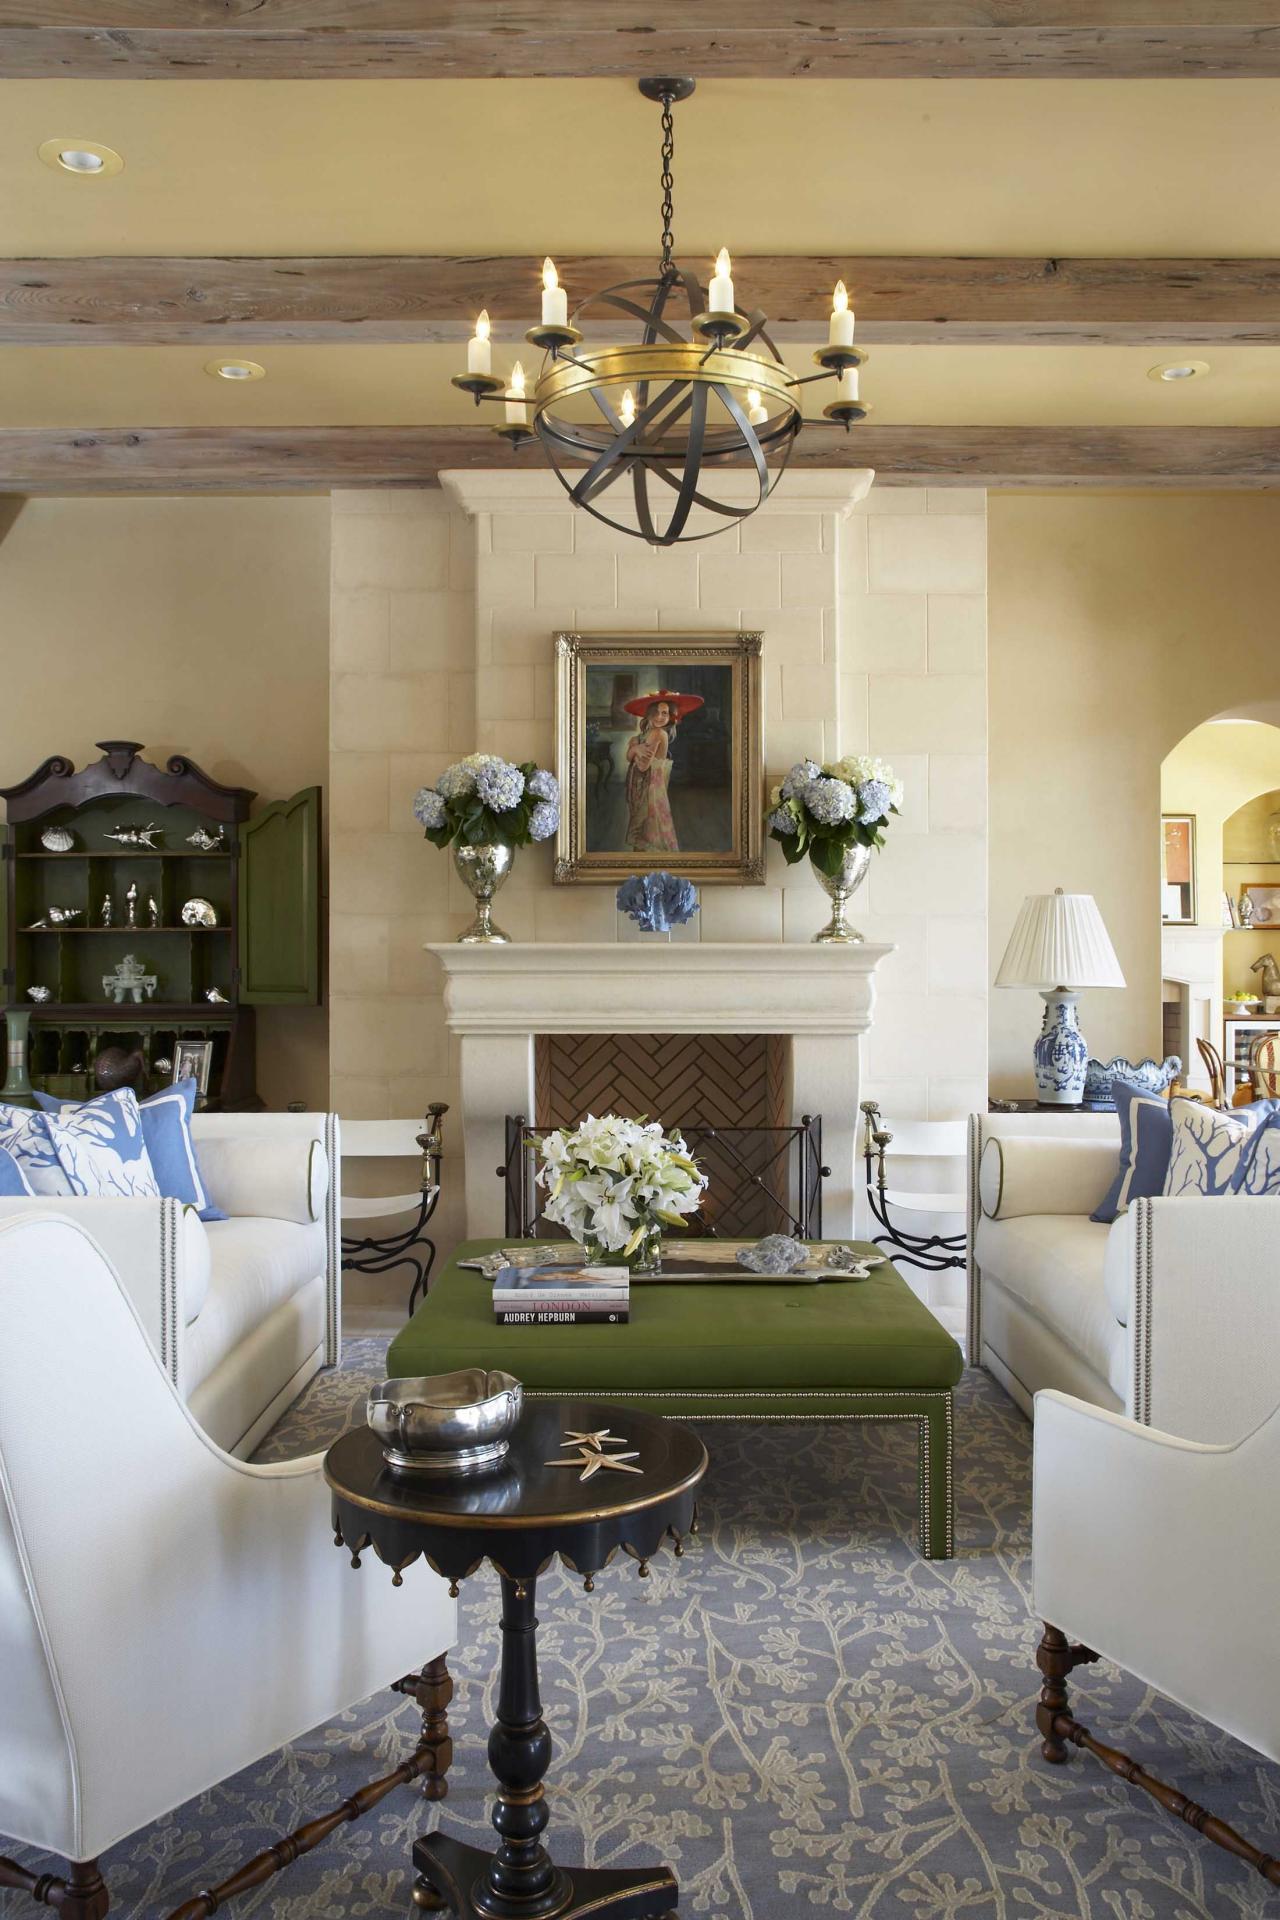 25 Mediterranean Living Room Design Ideas - Decoration Love